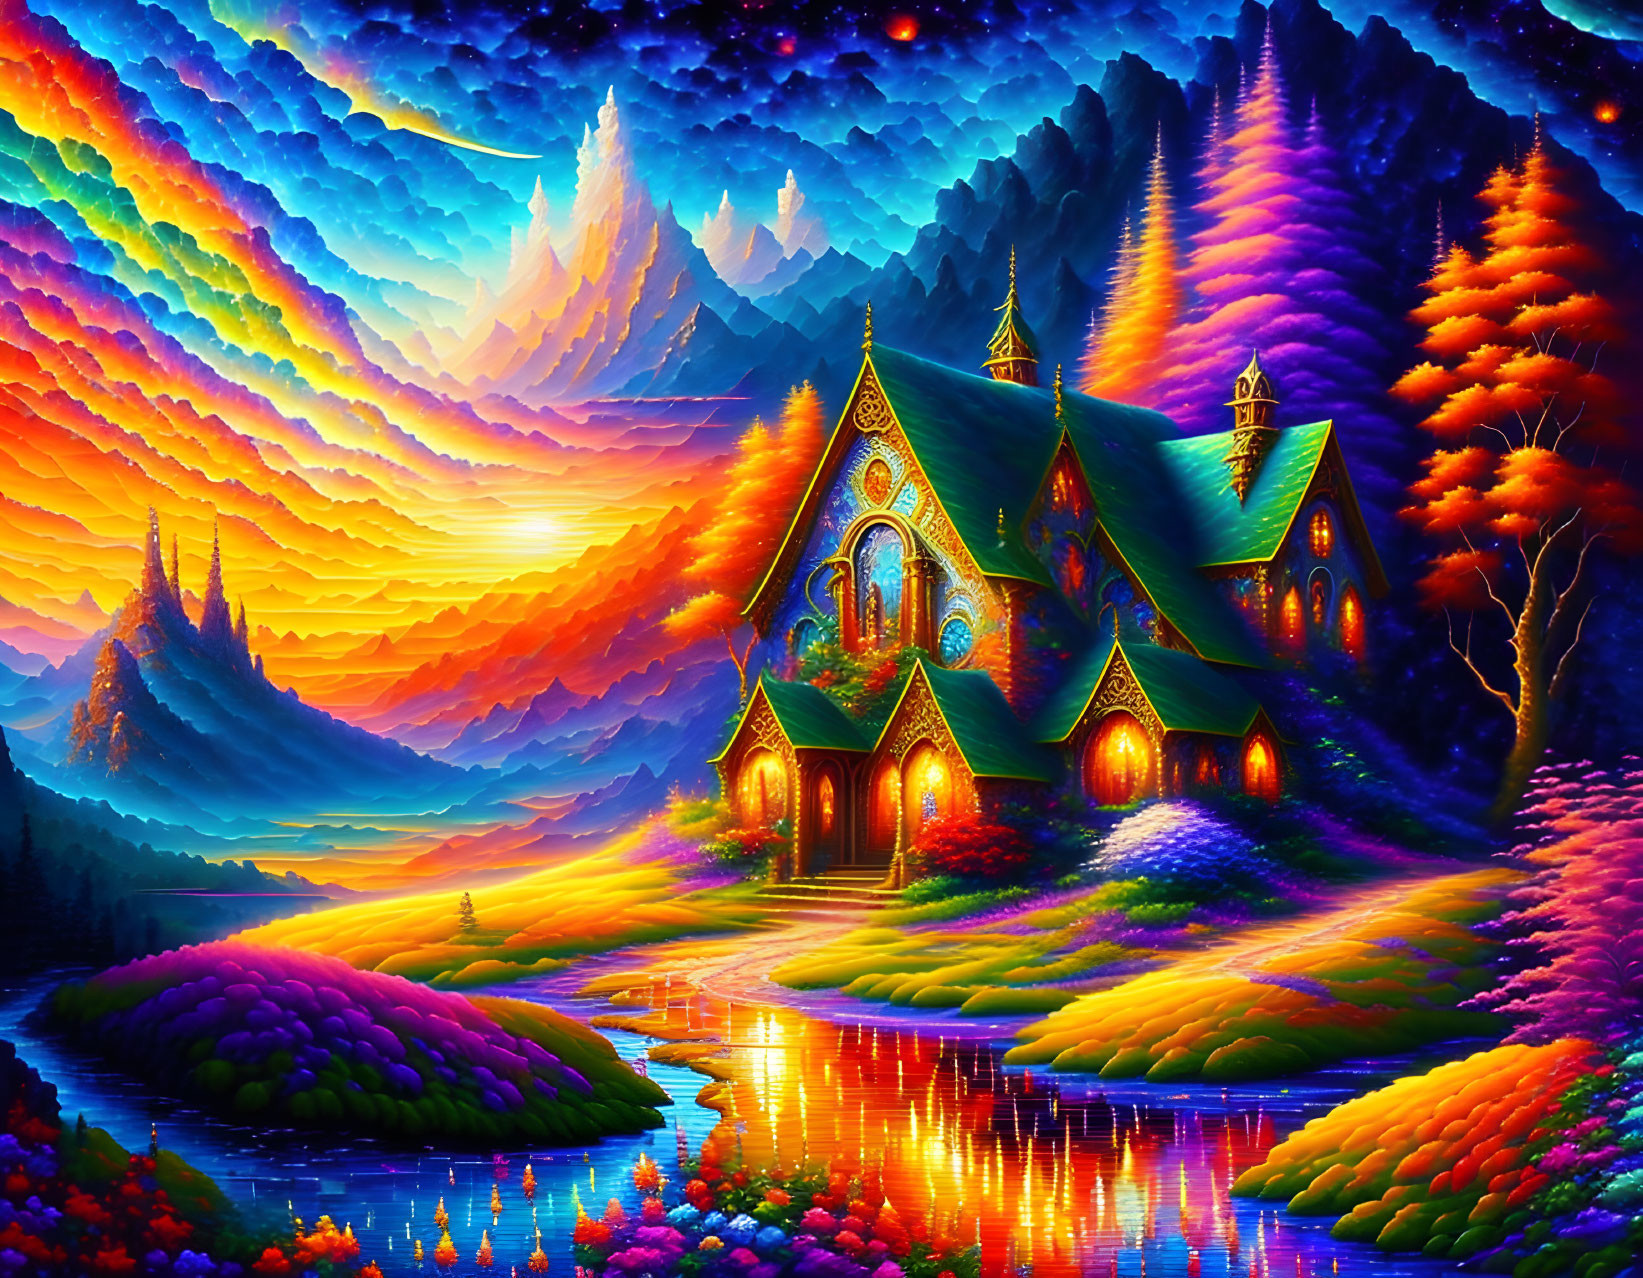 Colorful fantasy environment